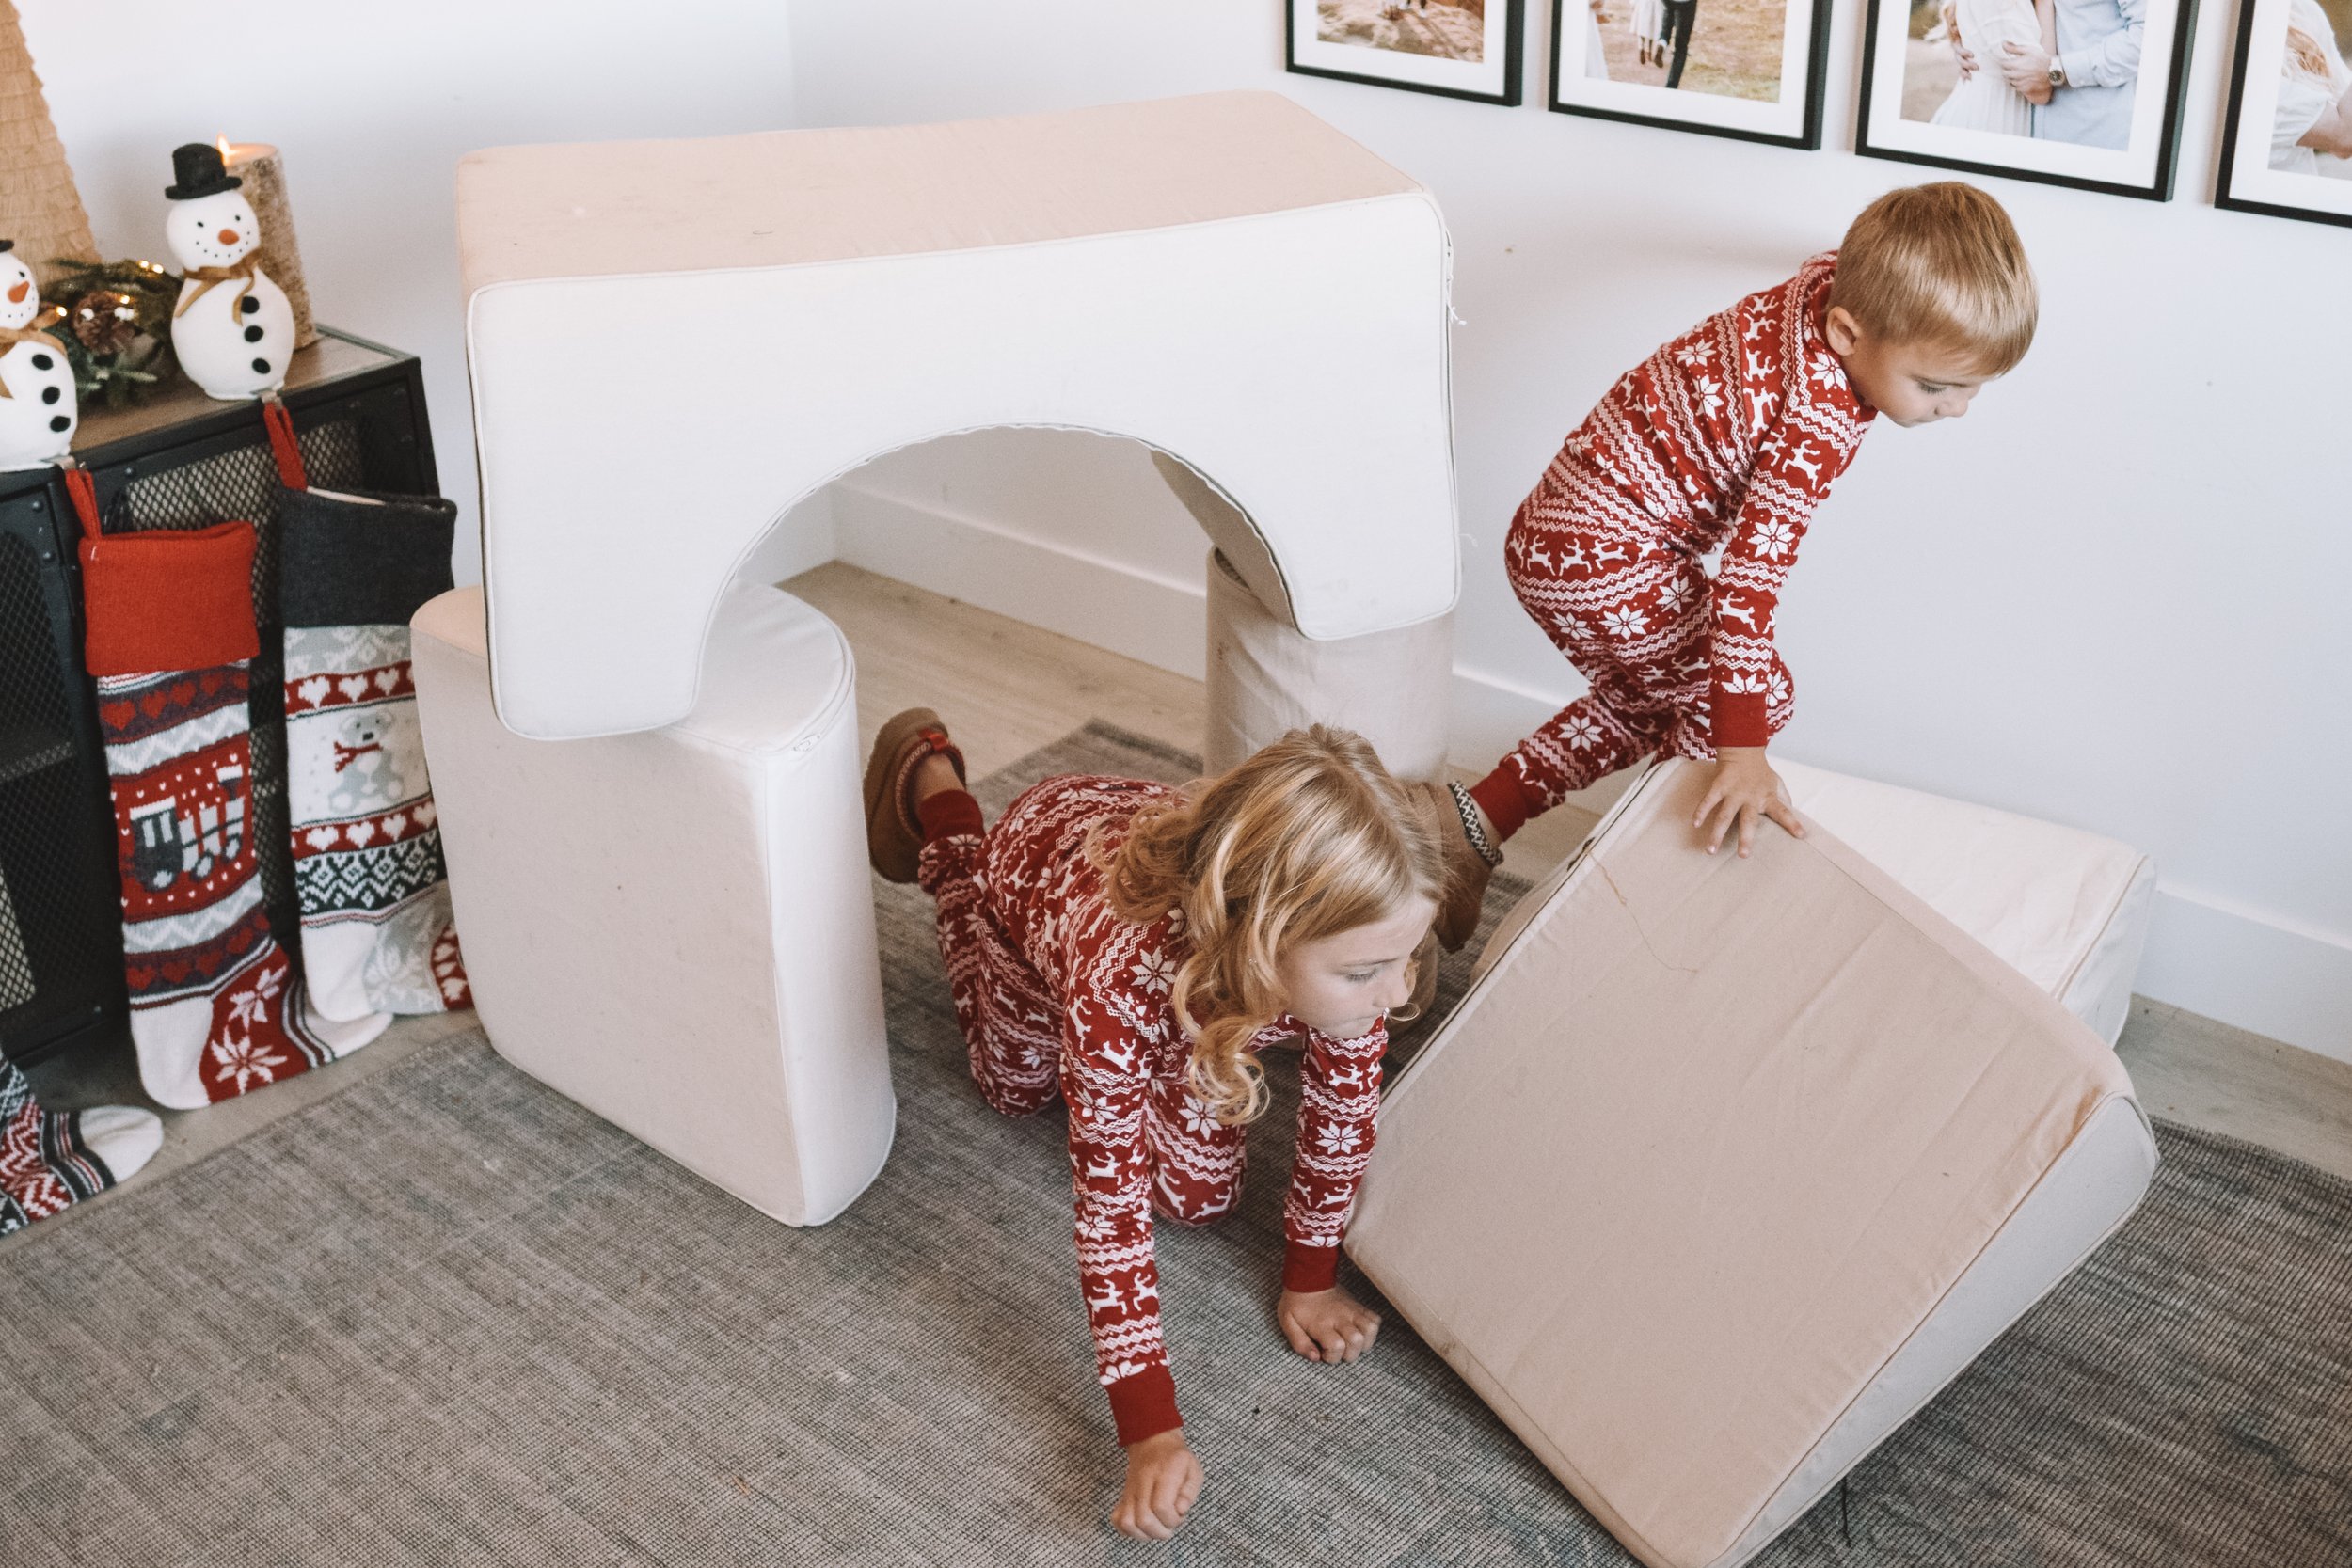 Kids Holiday Gift Ideas - Foam Play Blocks